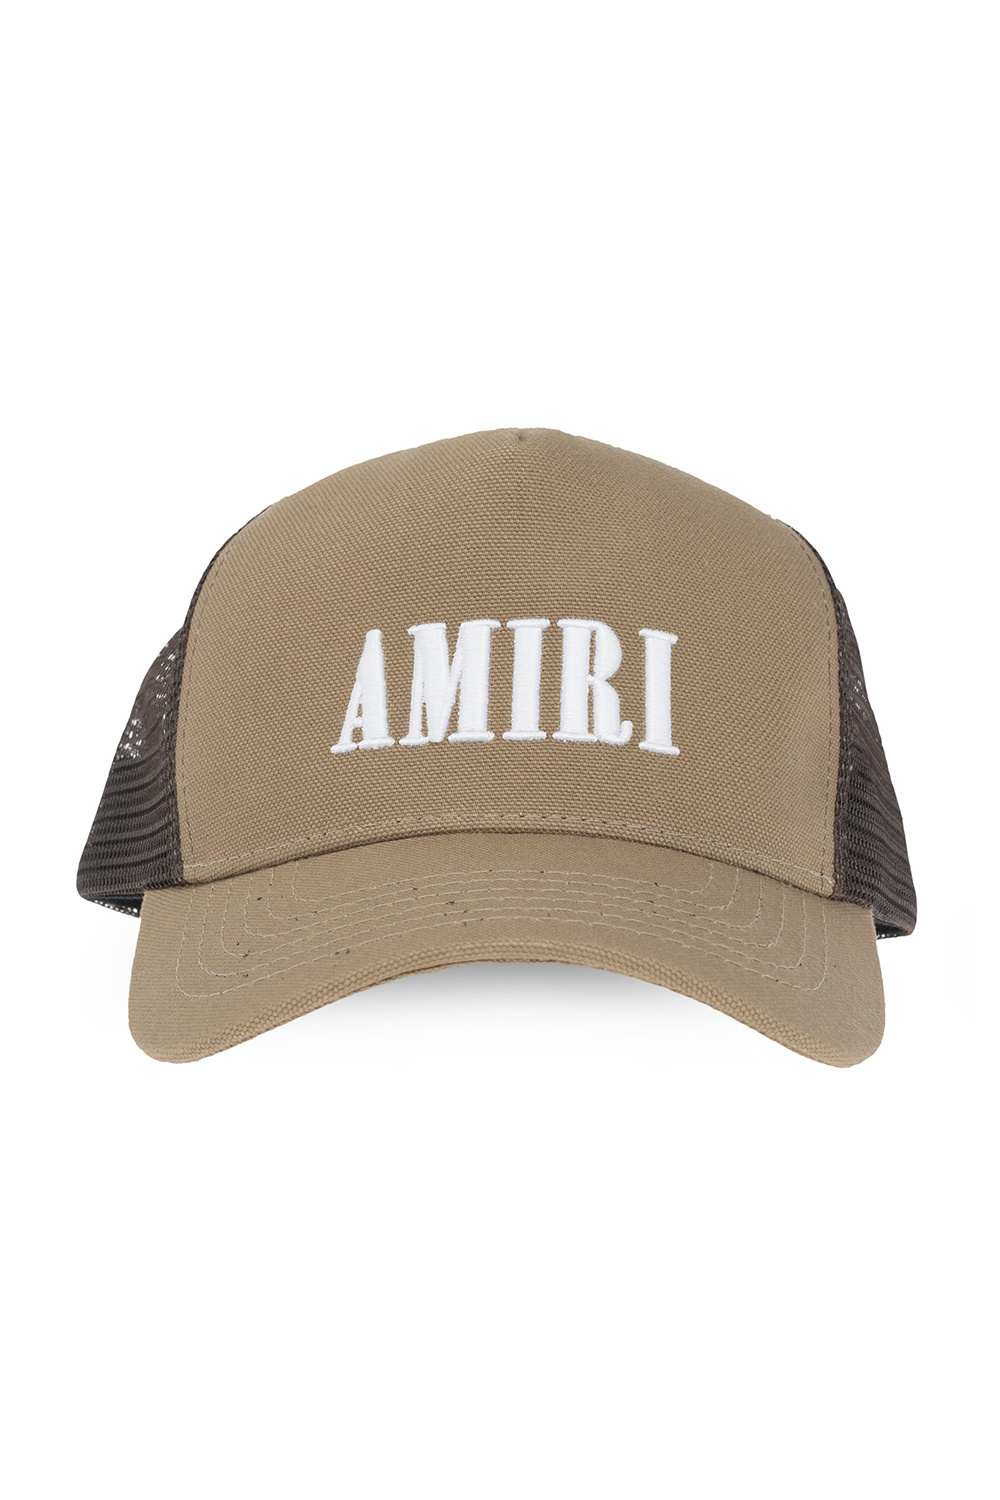 AMIRI Brown Star Leather Trucker Cap